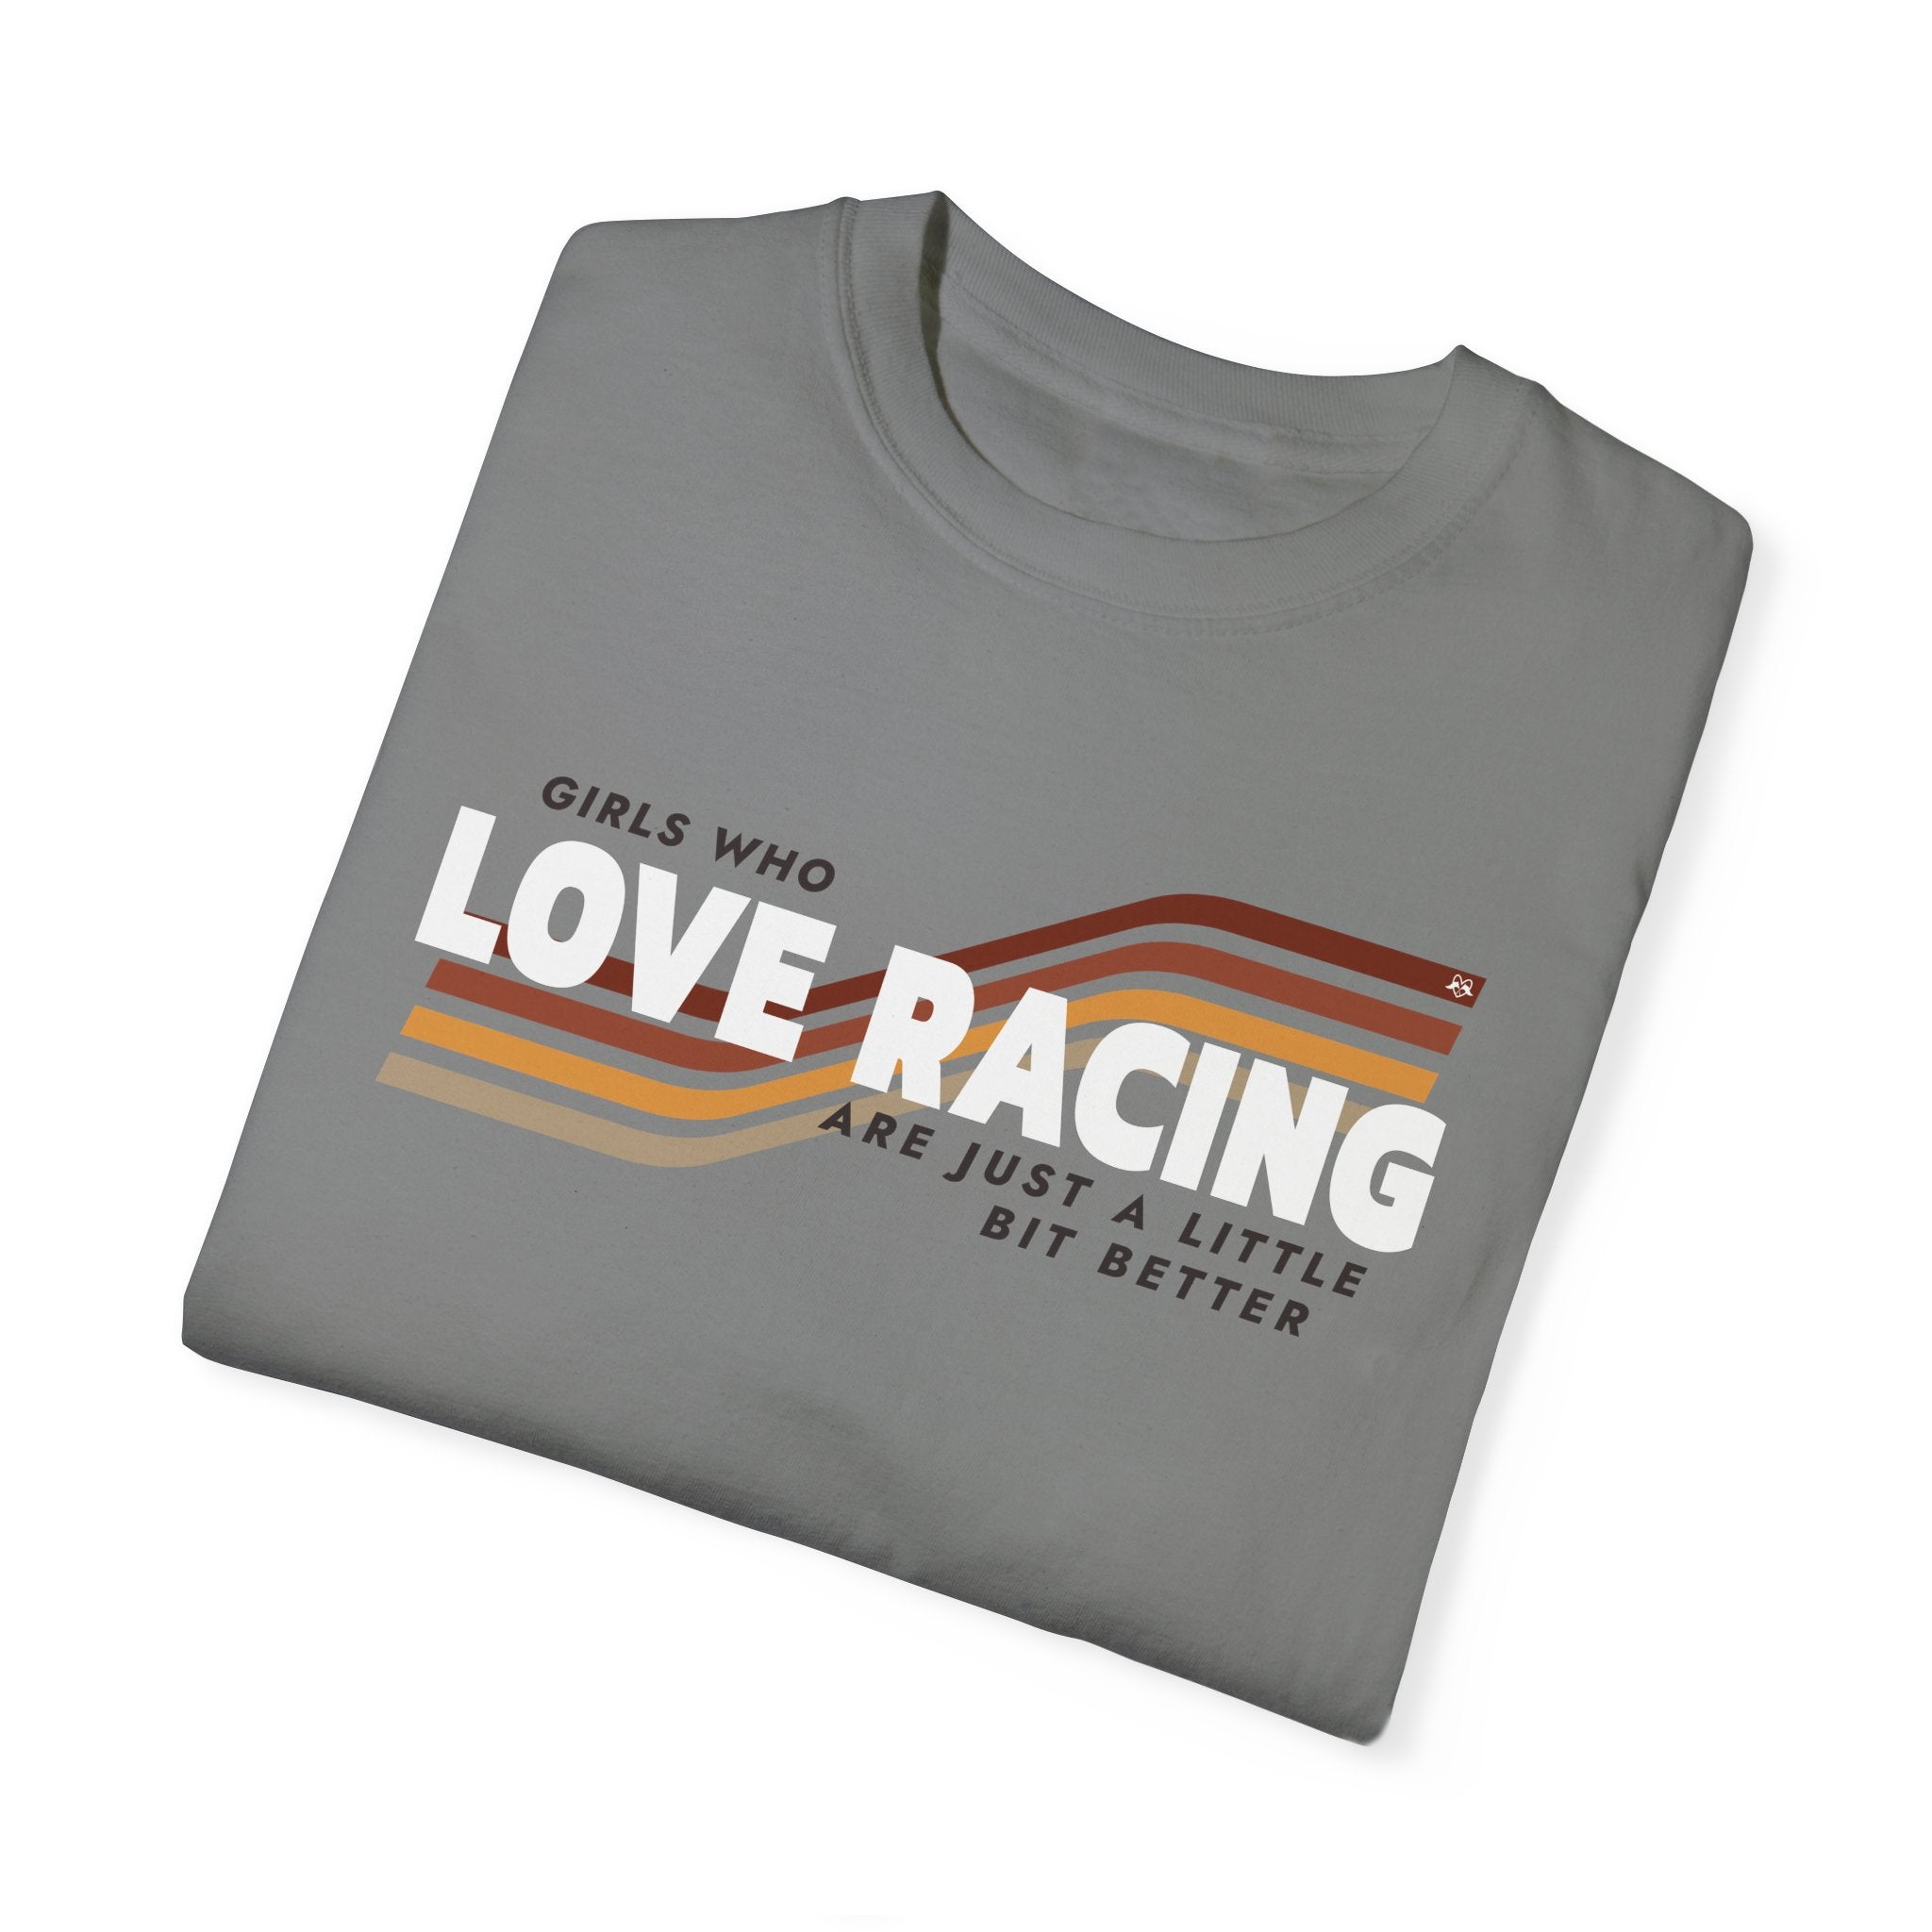 Girls Who Love Racing are Just a Little Bit Better Heavyweight Women's Raceday Graphic Tee